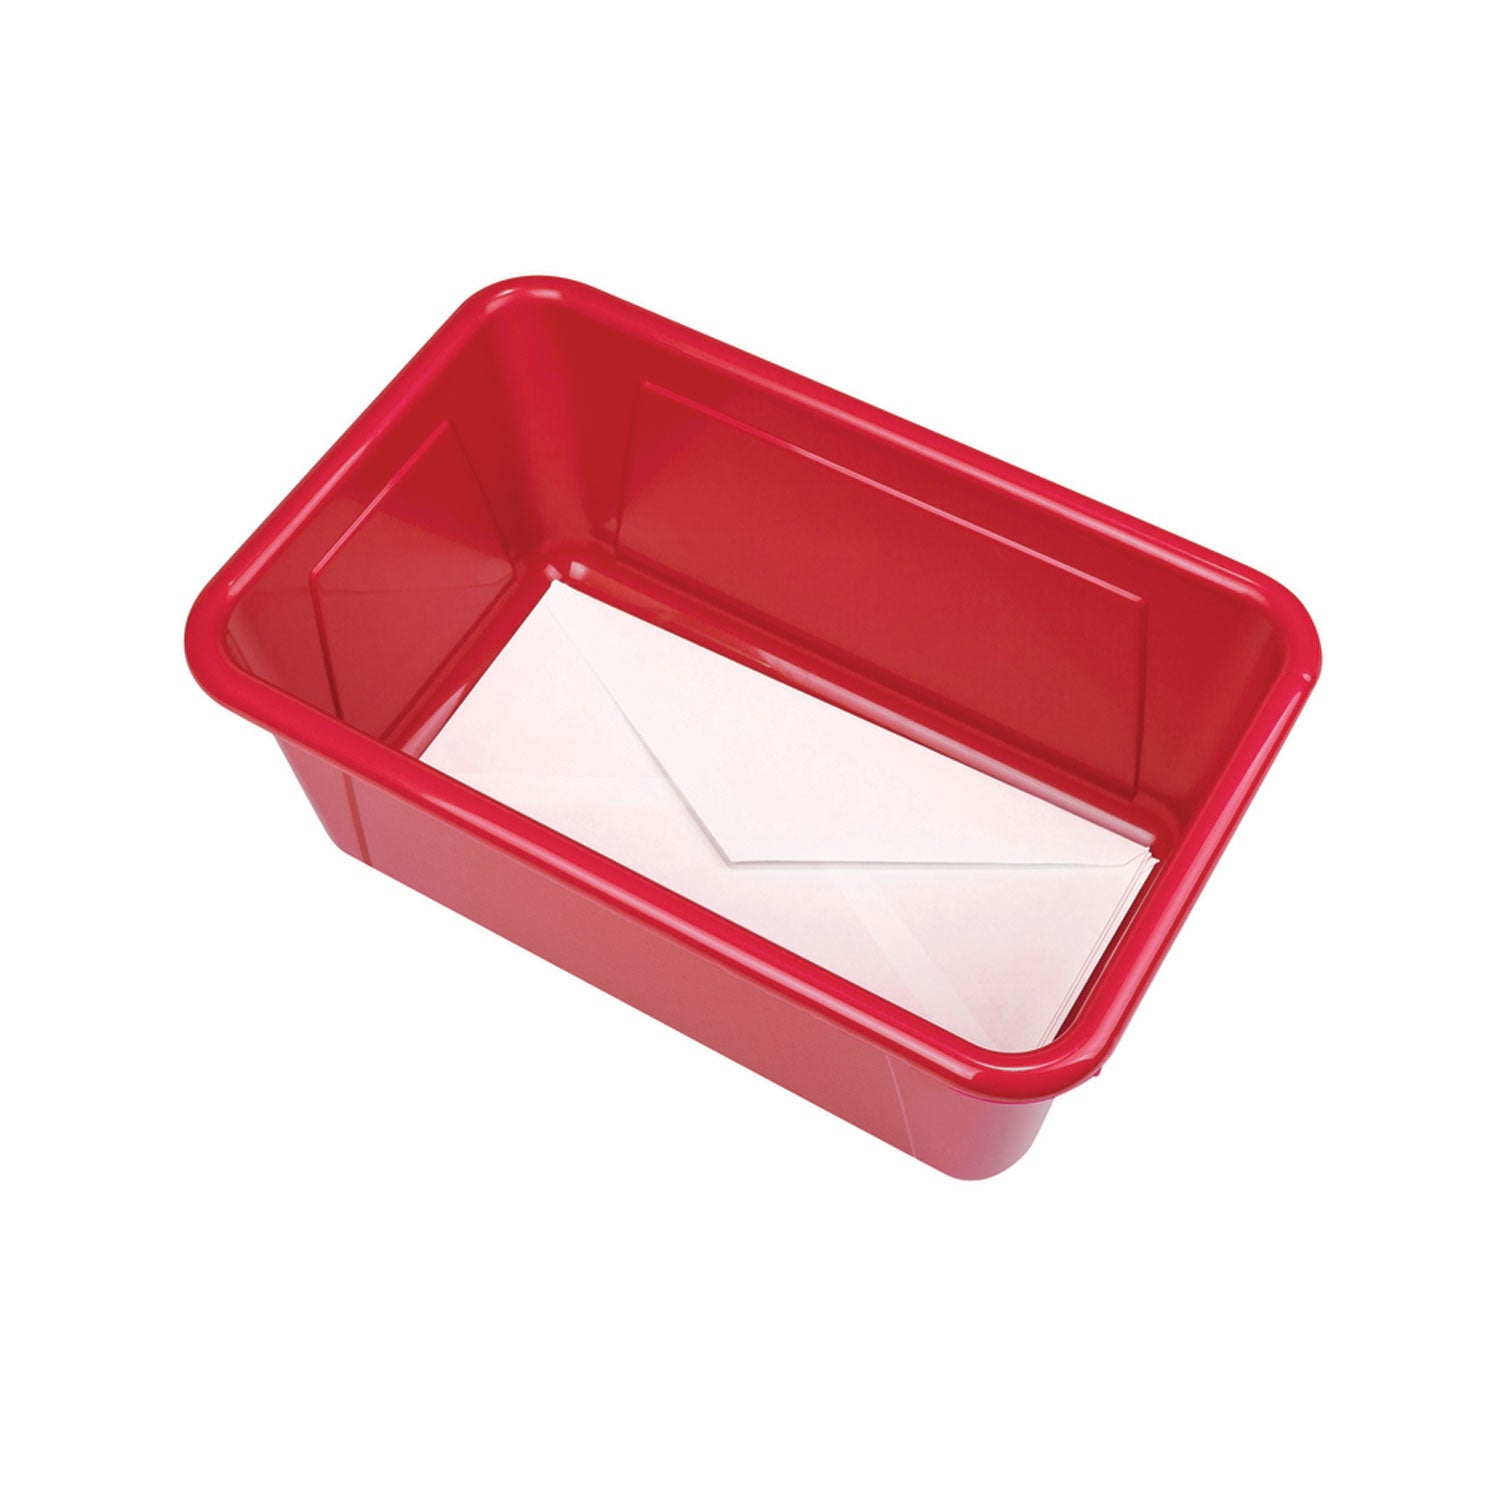 cubby-bin-with-lid-1228-x-795-x-523-red-5-pack_stx62407u05c - 2